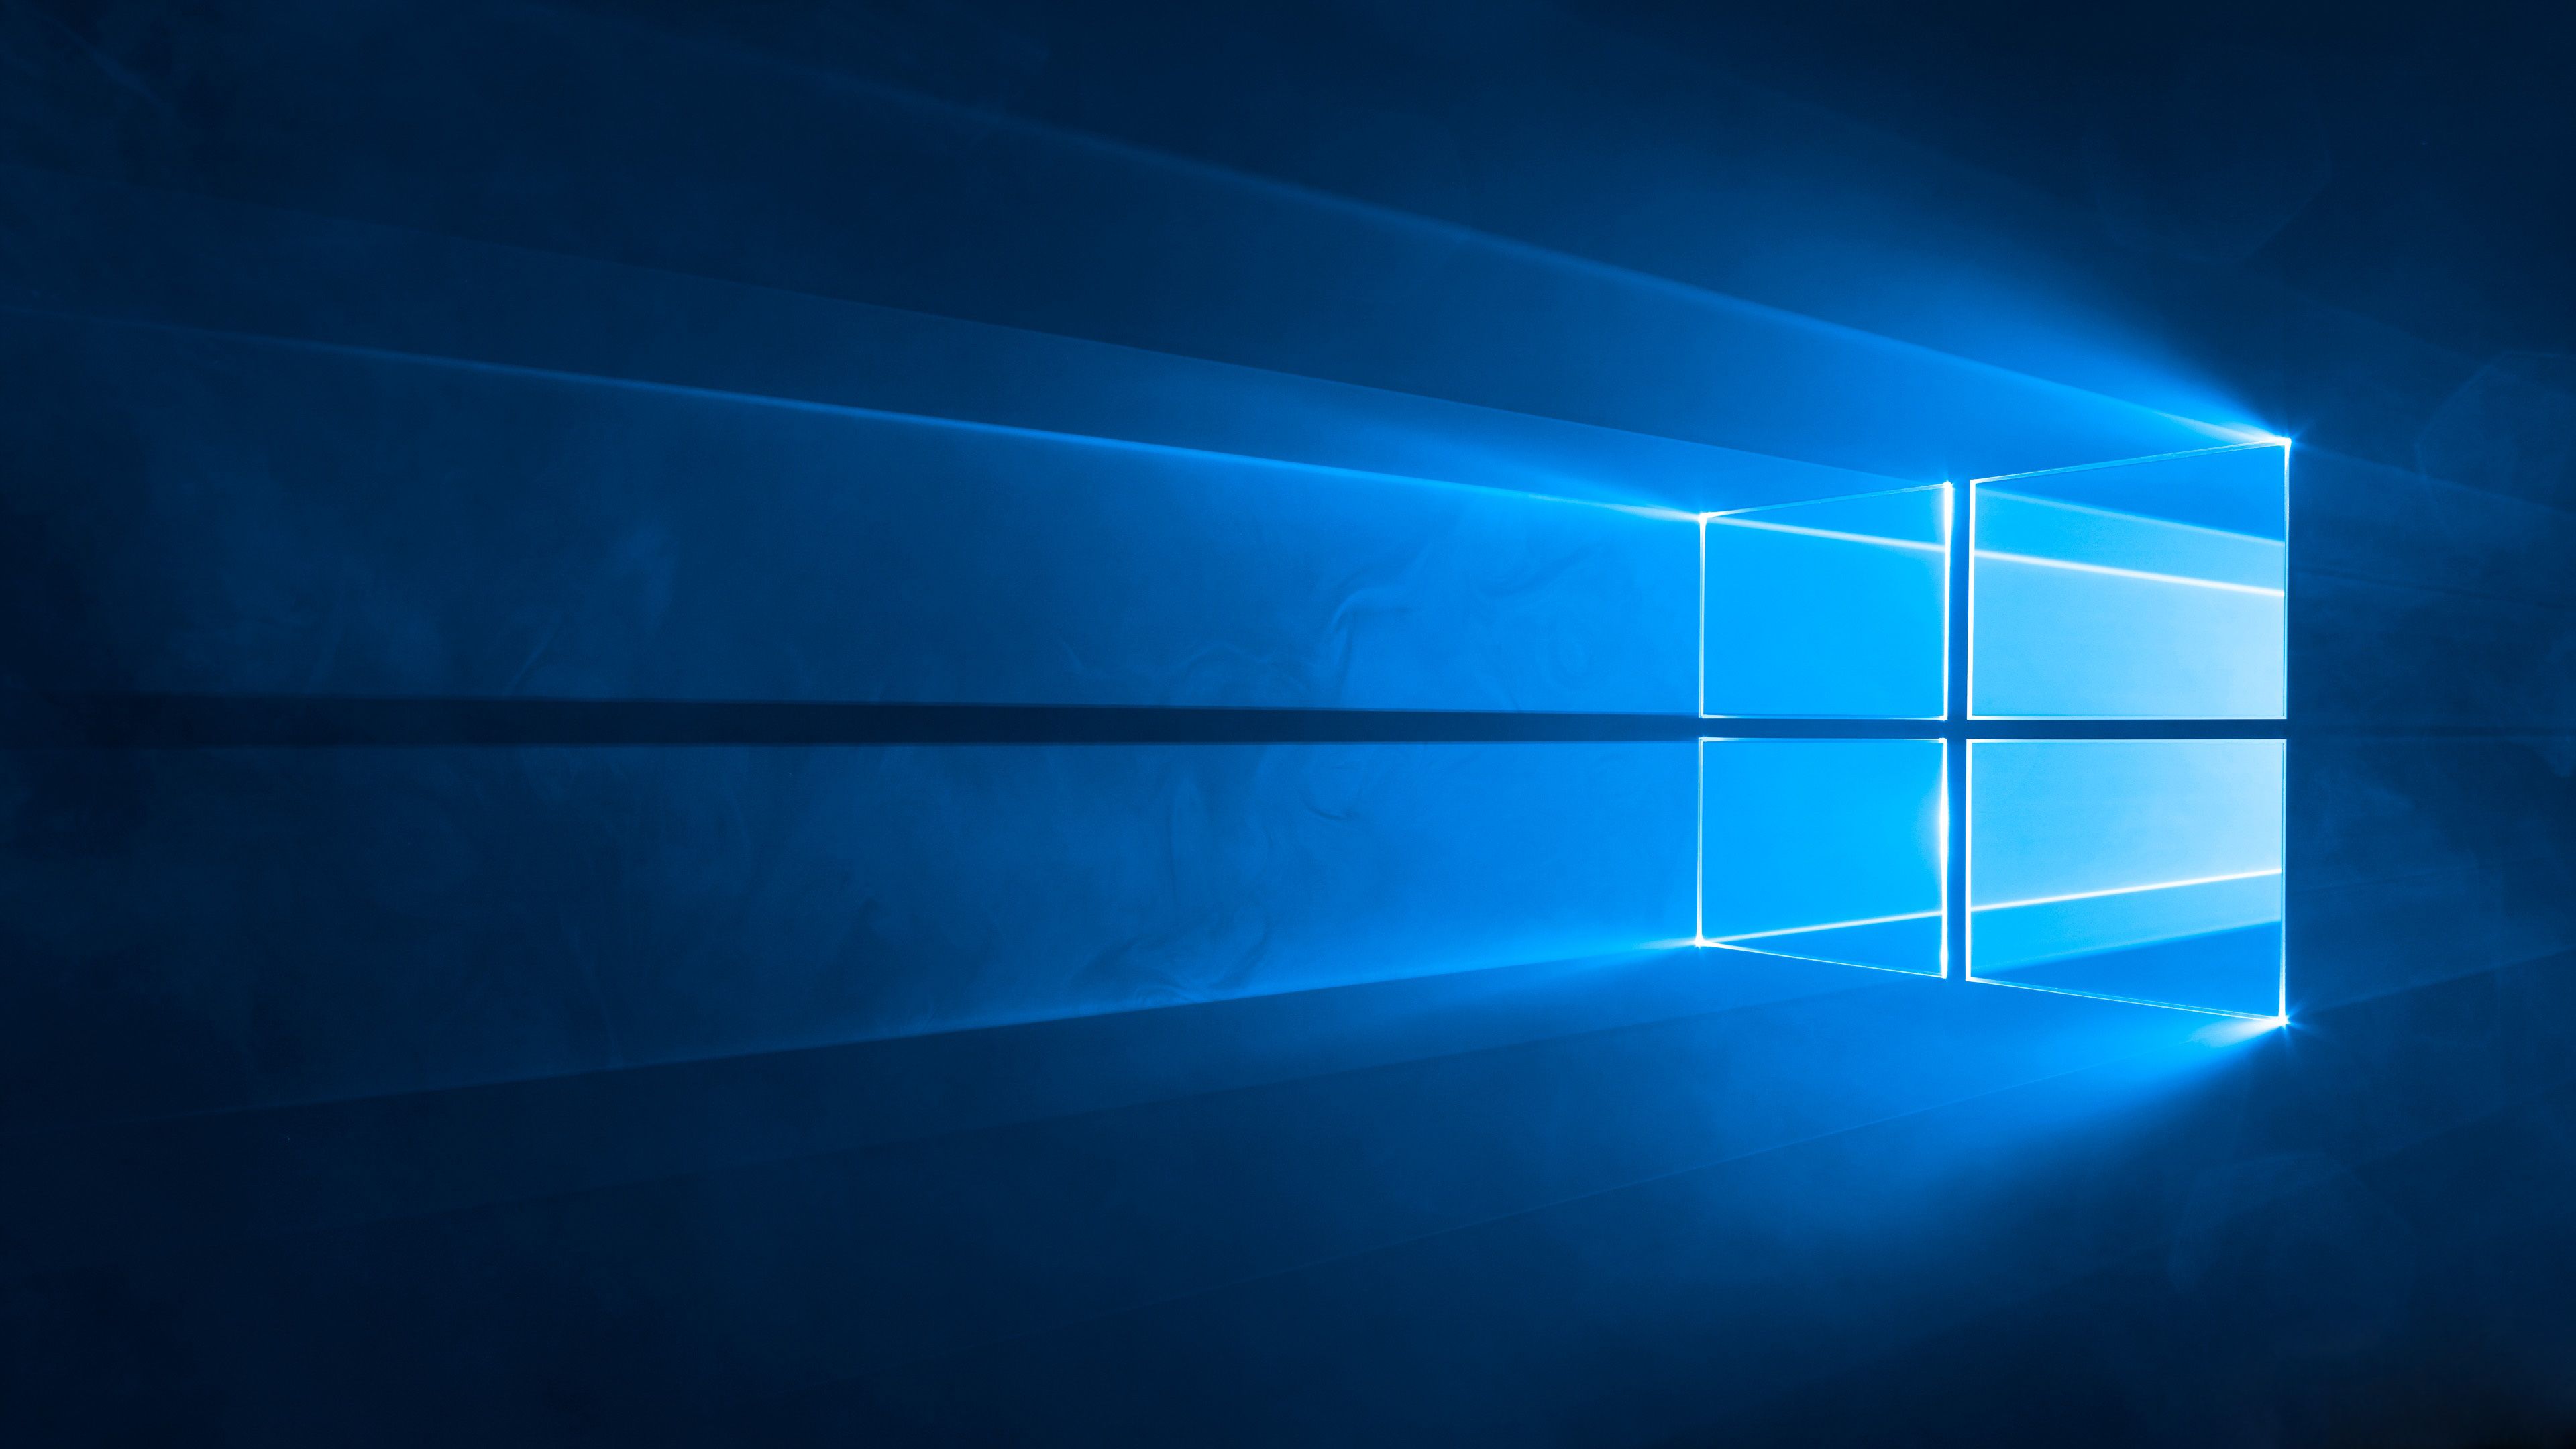 Windows-10-Hero-Blue-Desktop-Background-4K-Wallpaper.jpg